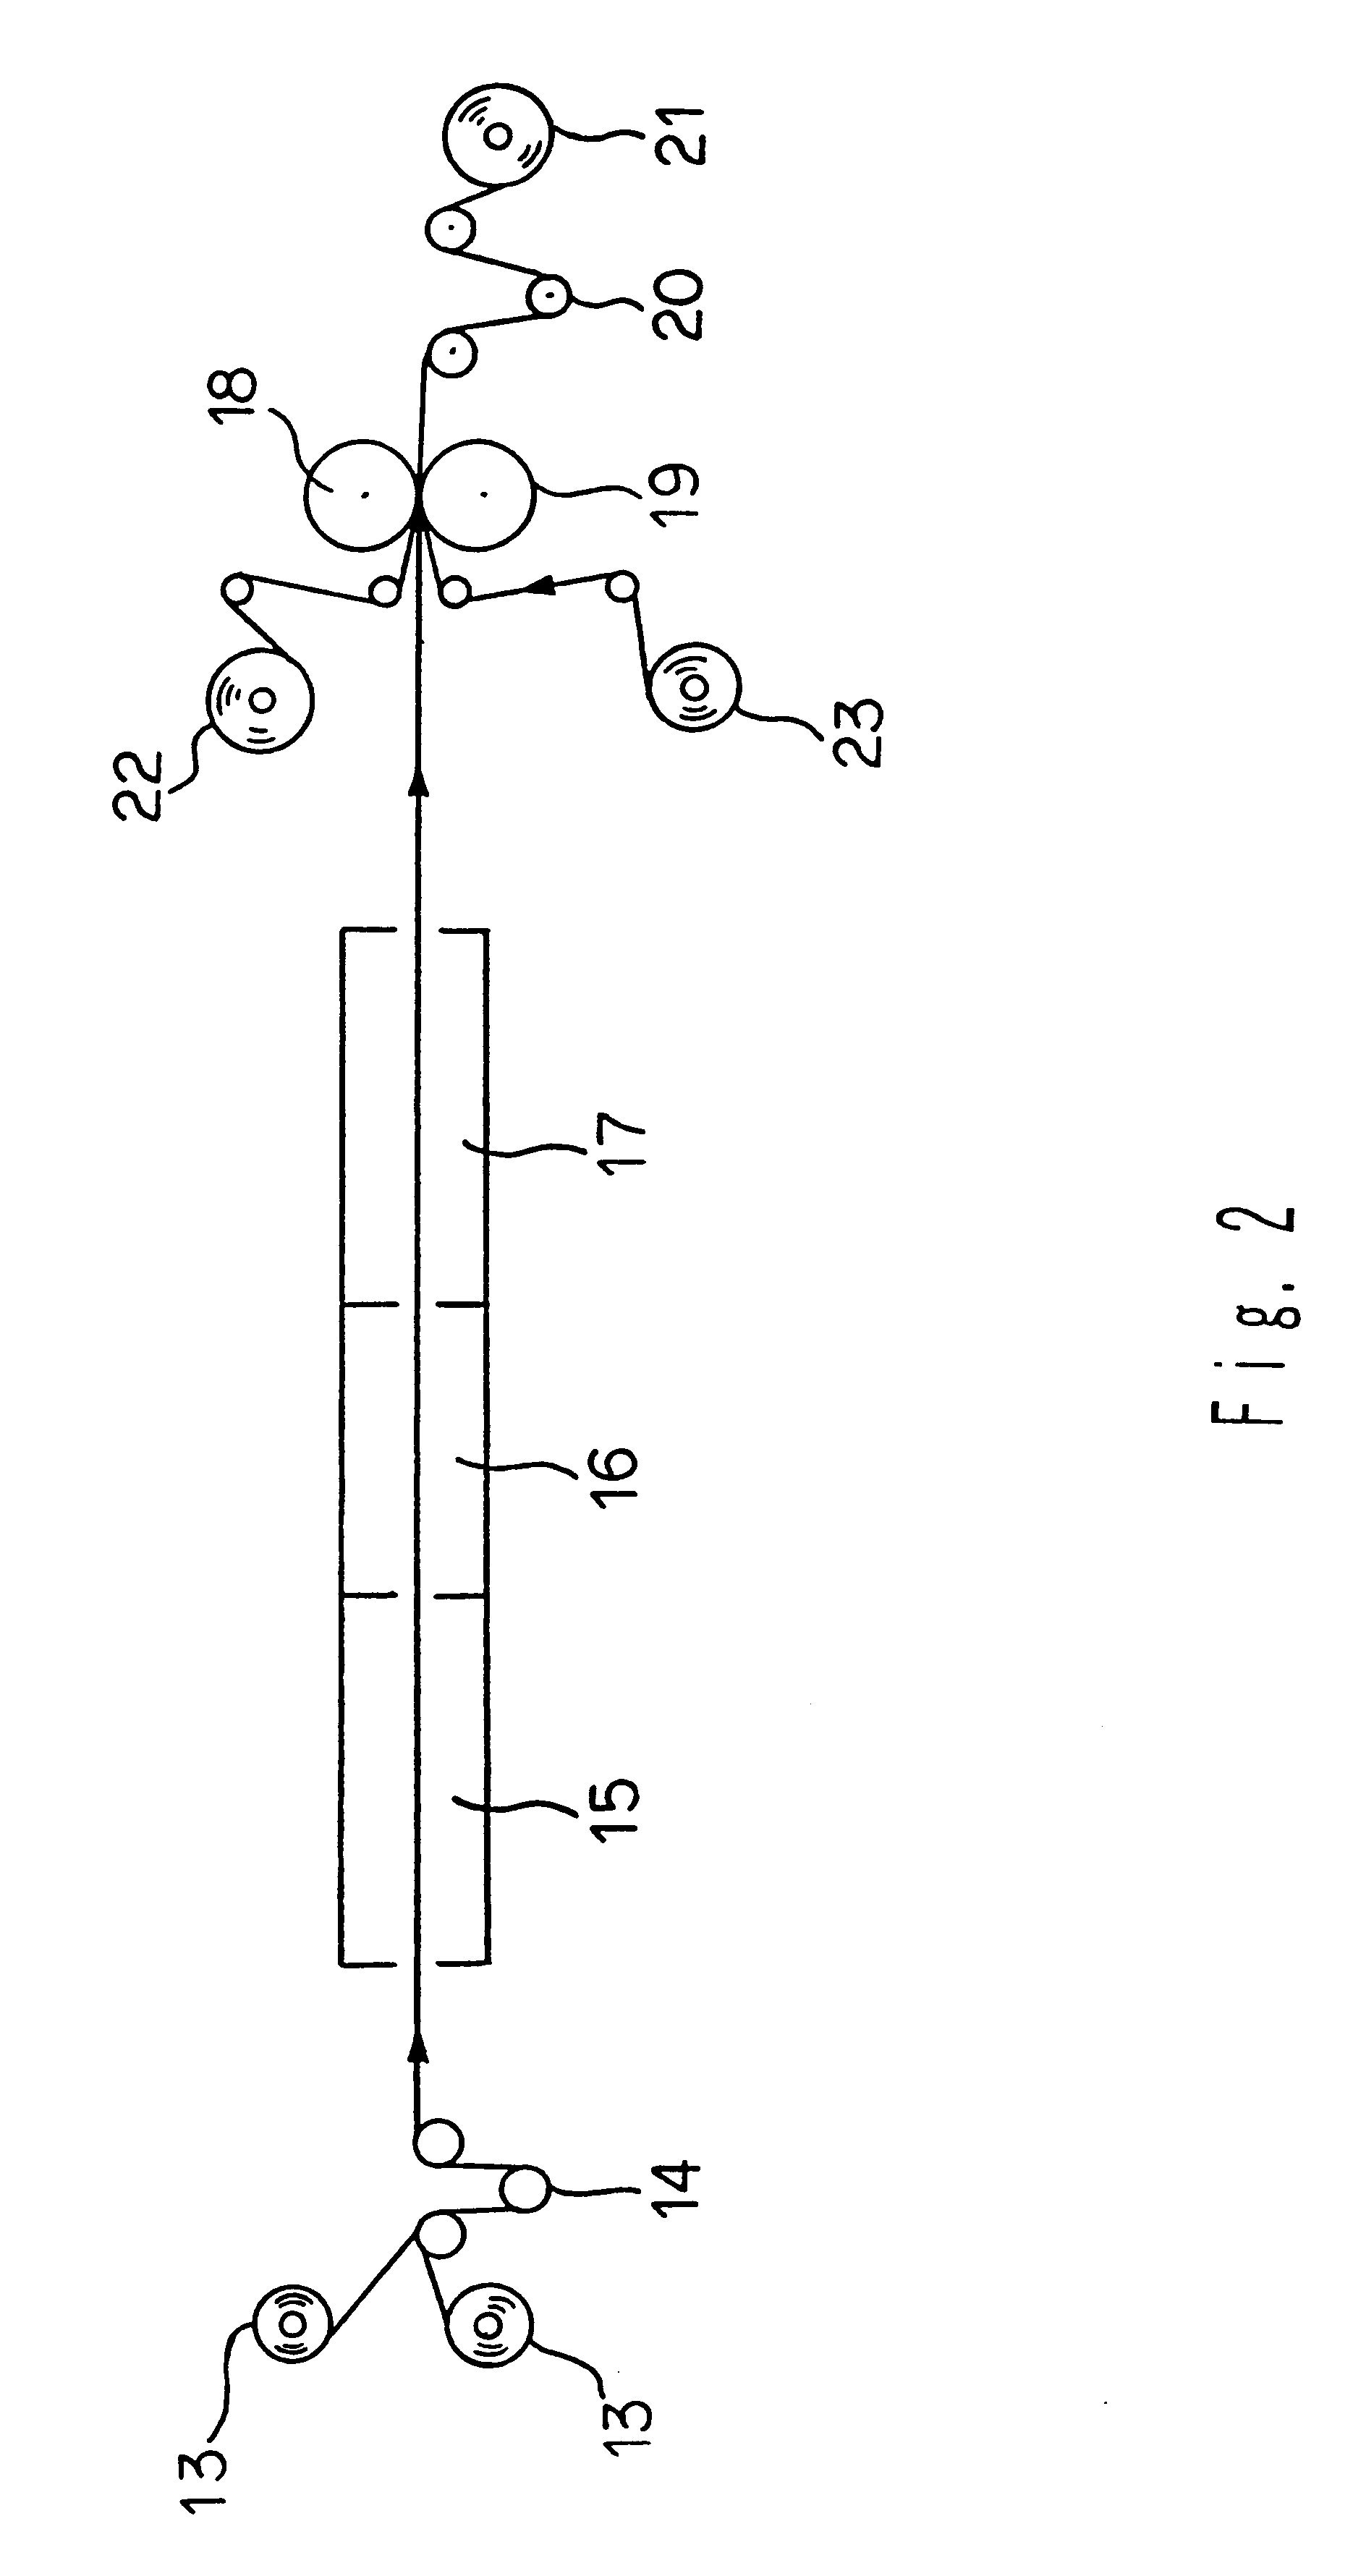 Filter medium and air filter unit using the same